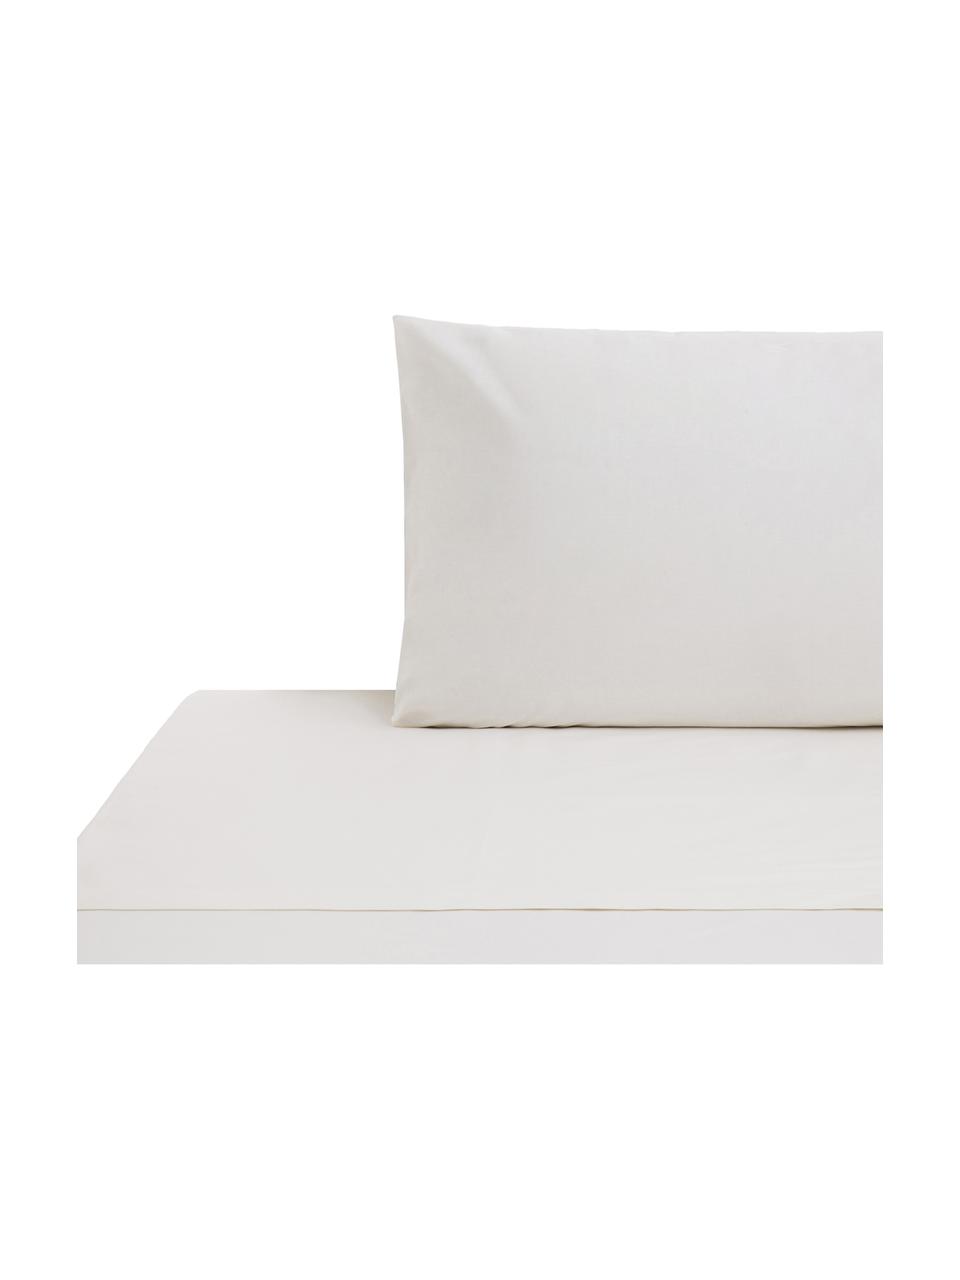 Ropa de cama de renforcé Lenare, Marfil claro, Cama 90 cm (150 x 290 cm)